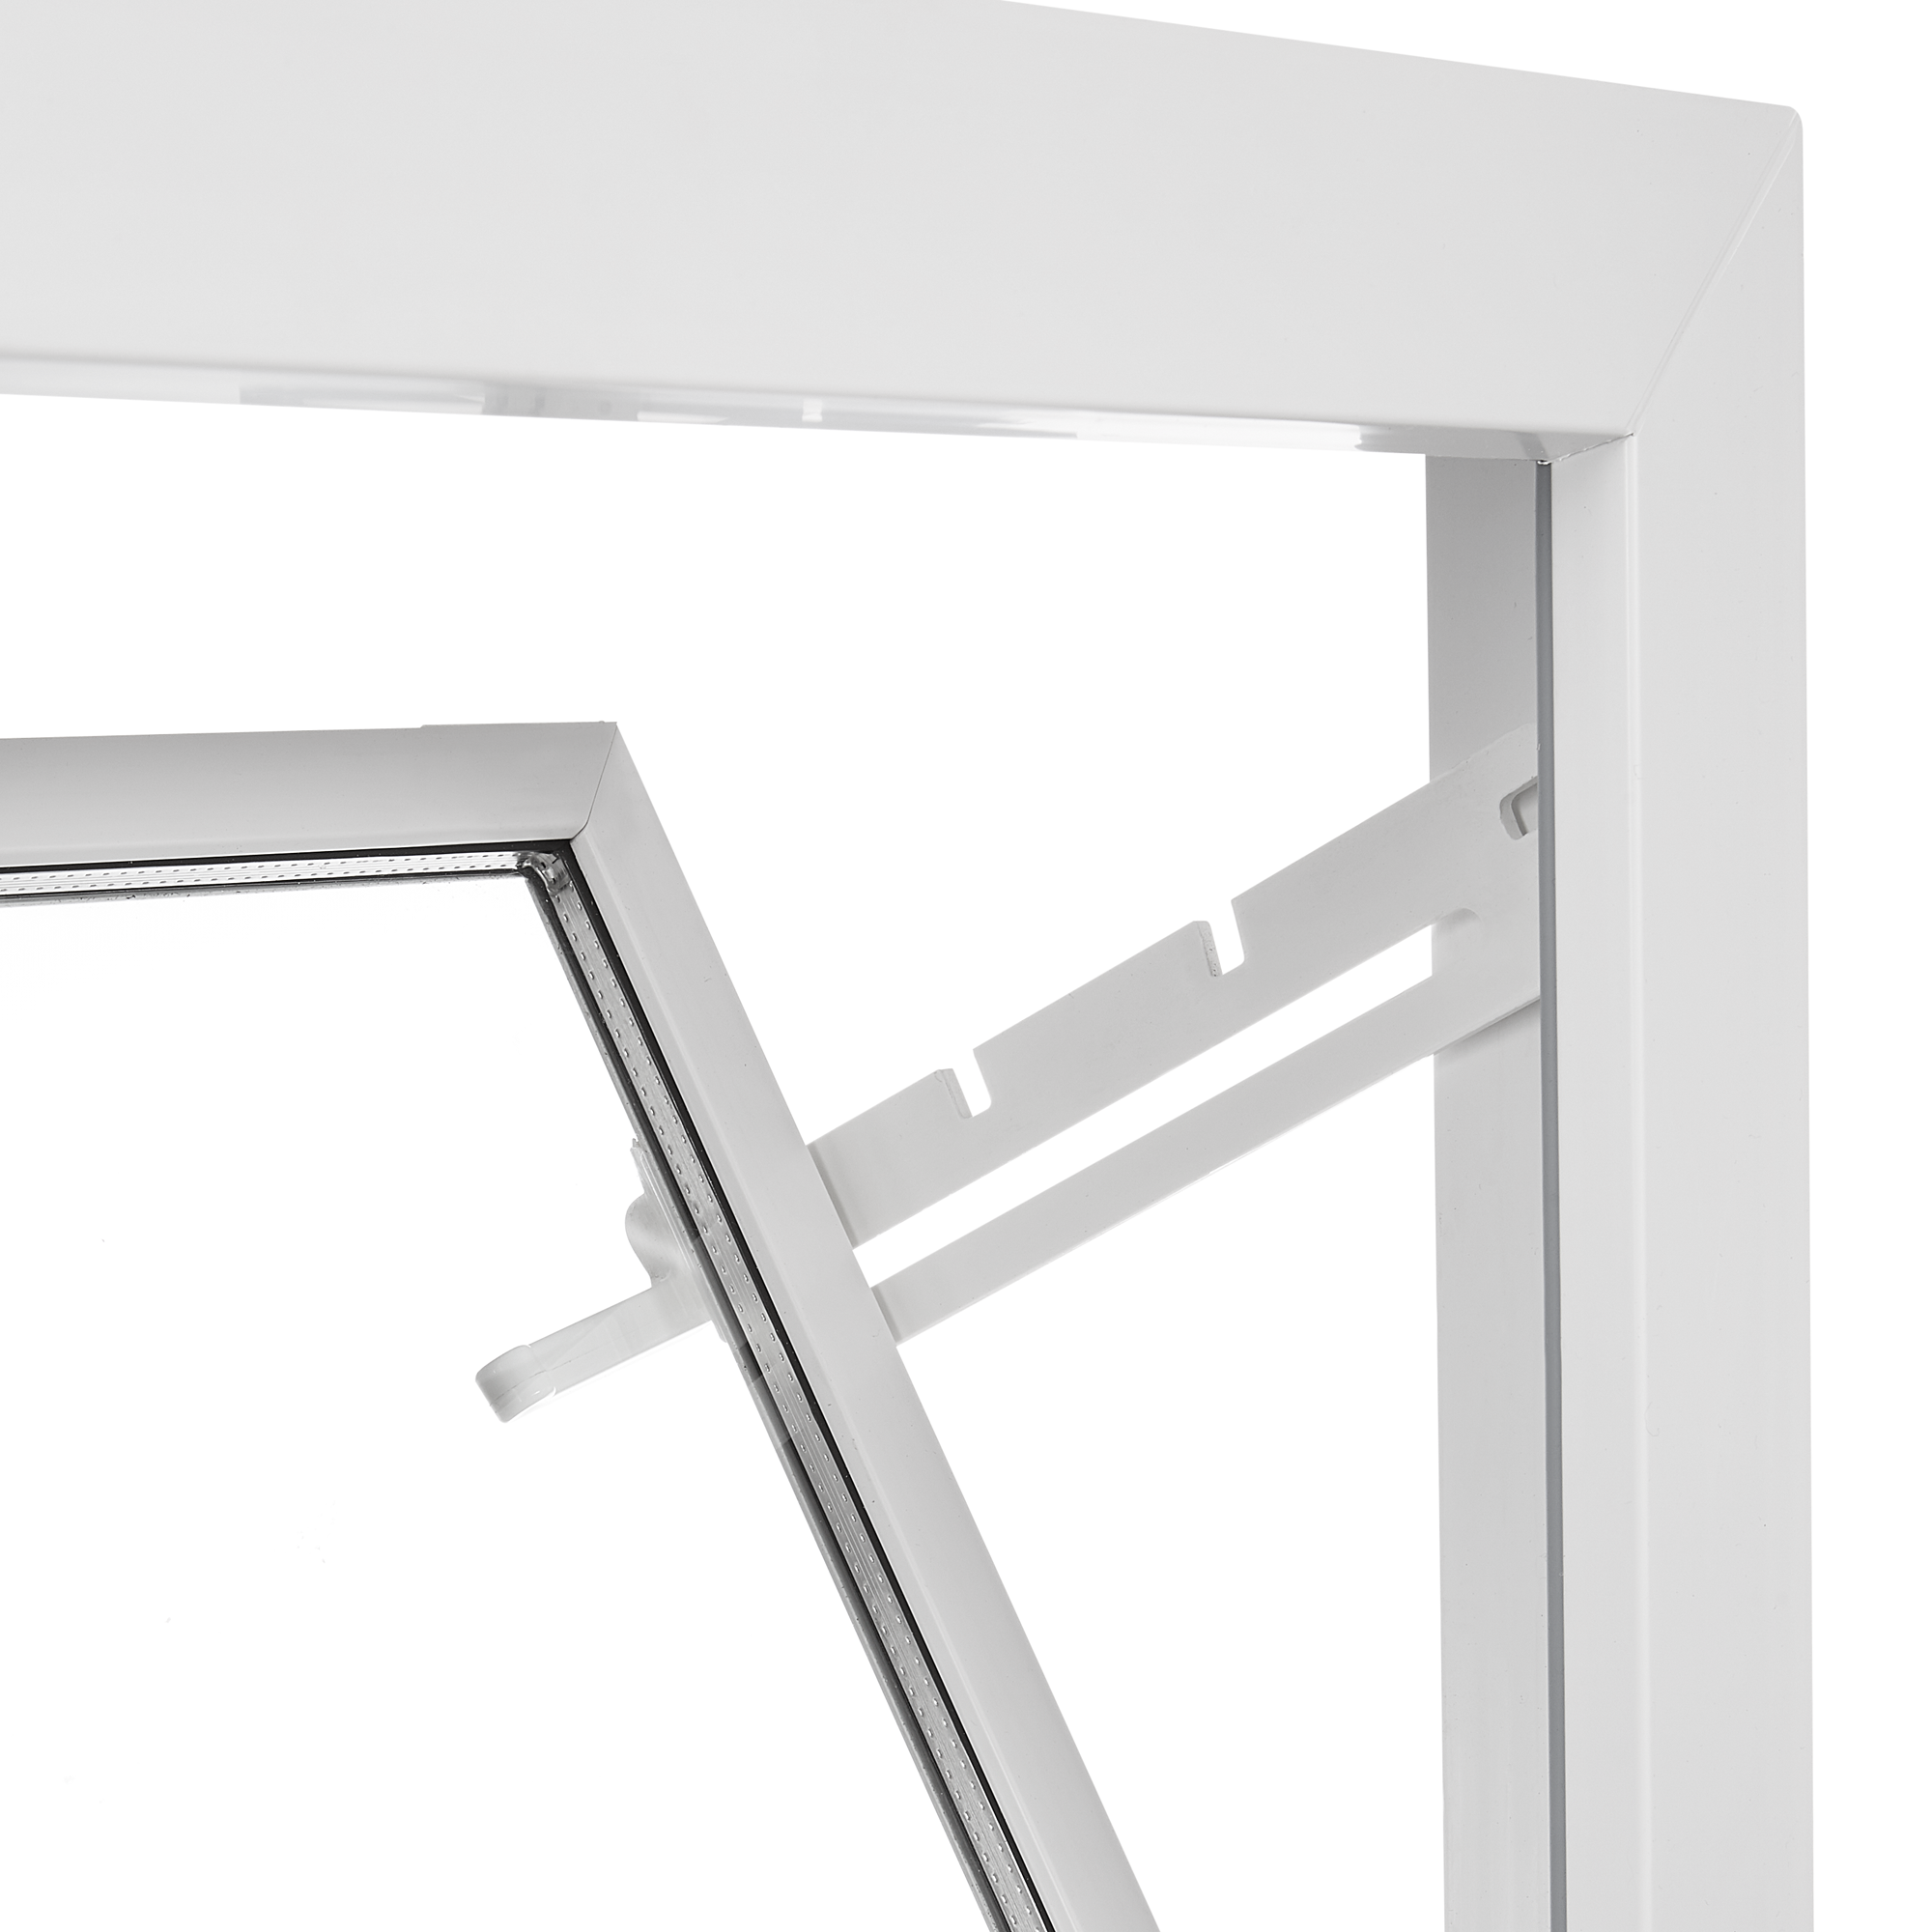 Kippfenster weiß 1-flügelig 80 x 50 cm + product picture